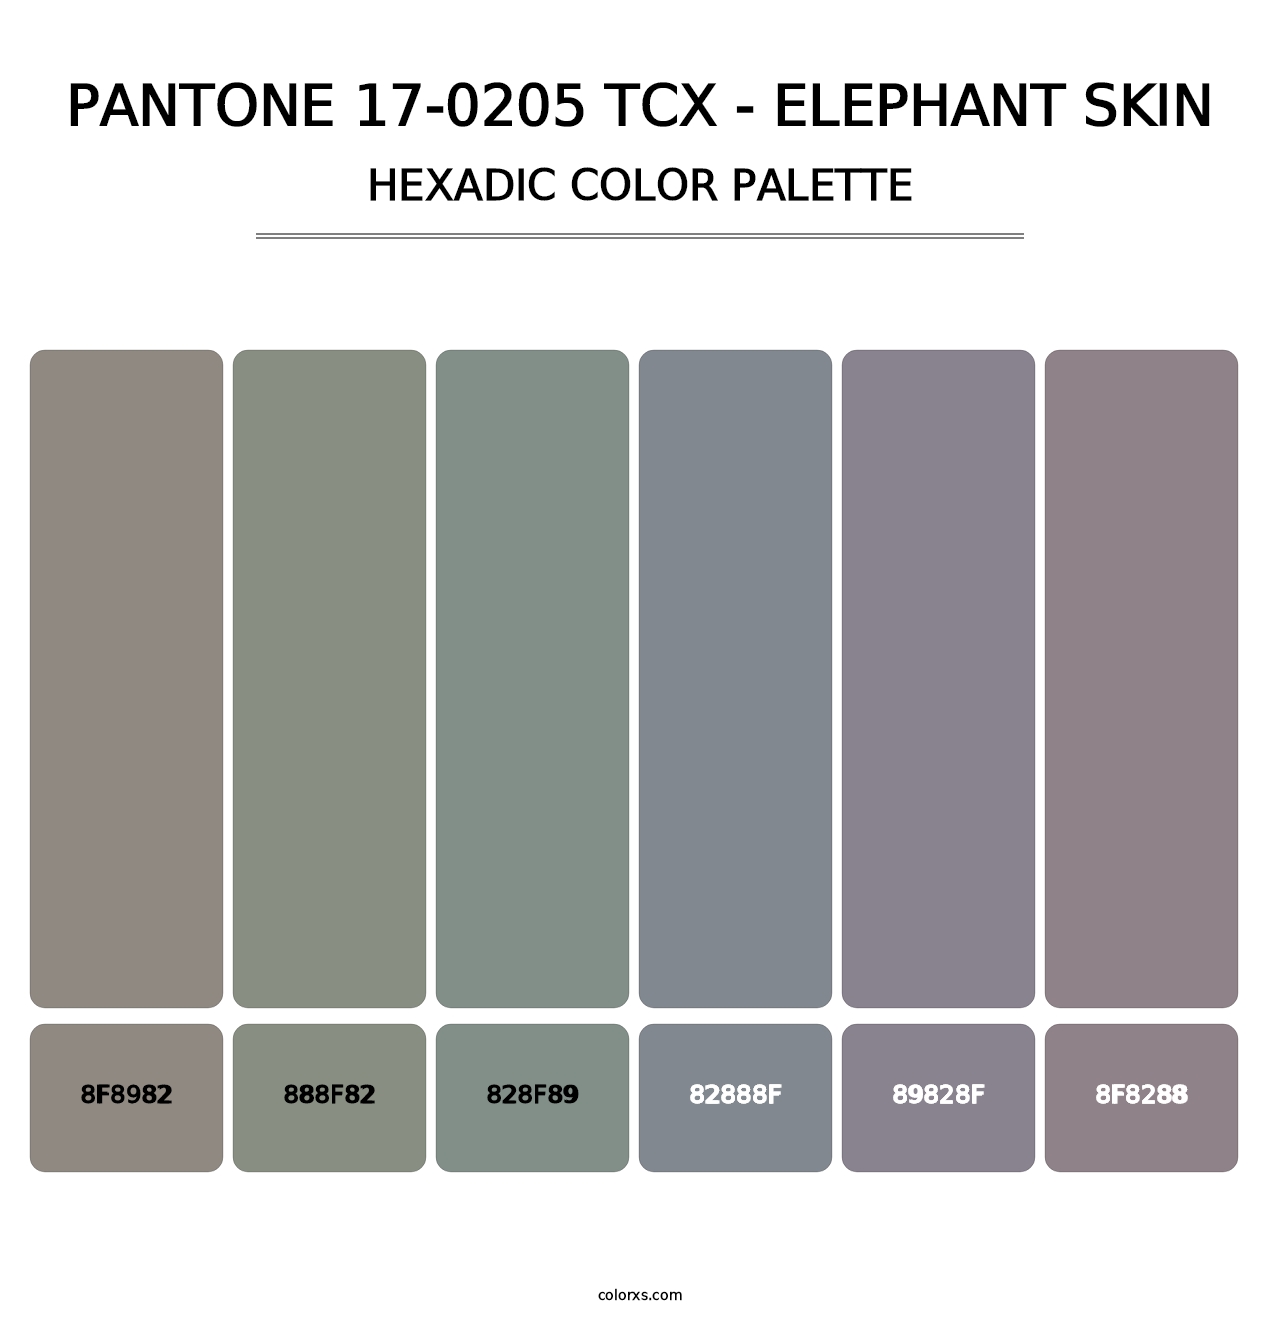 PANTONE 17-0205 TCX - Elephant Skin - Hexadic Color Palette